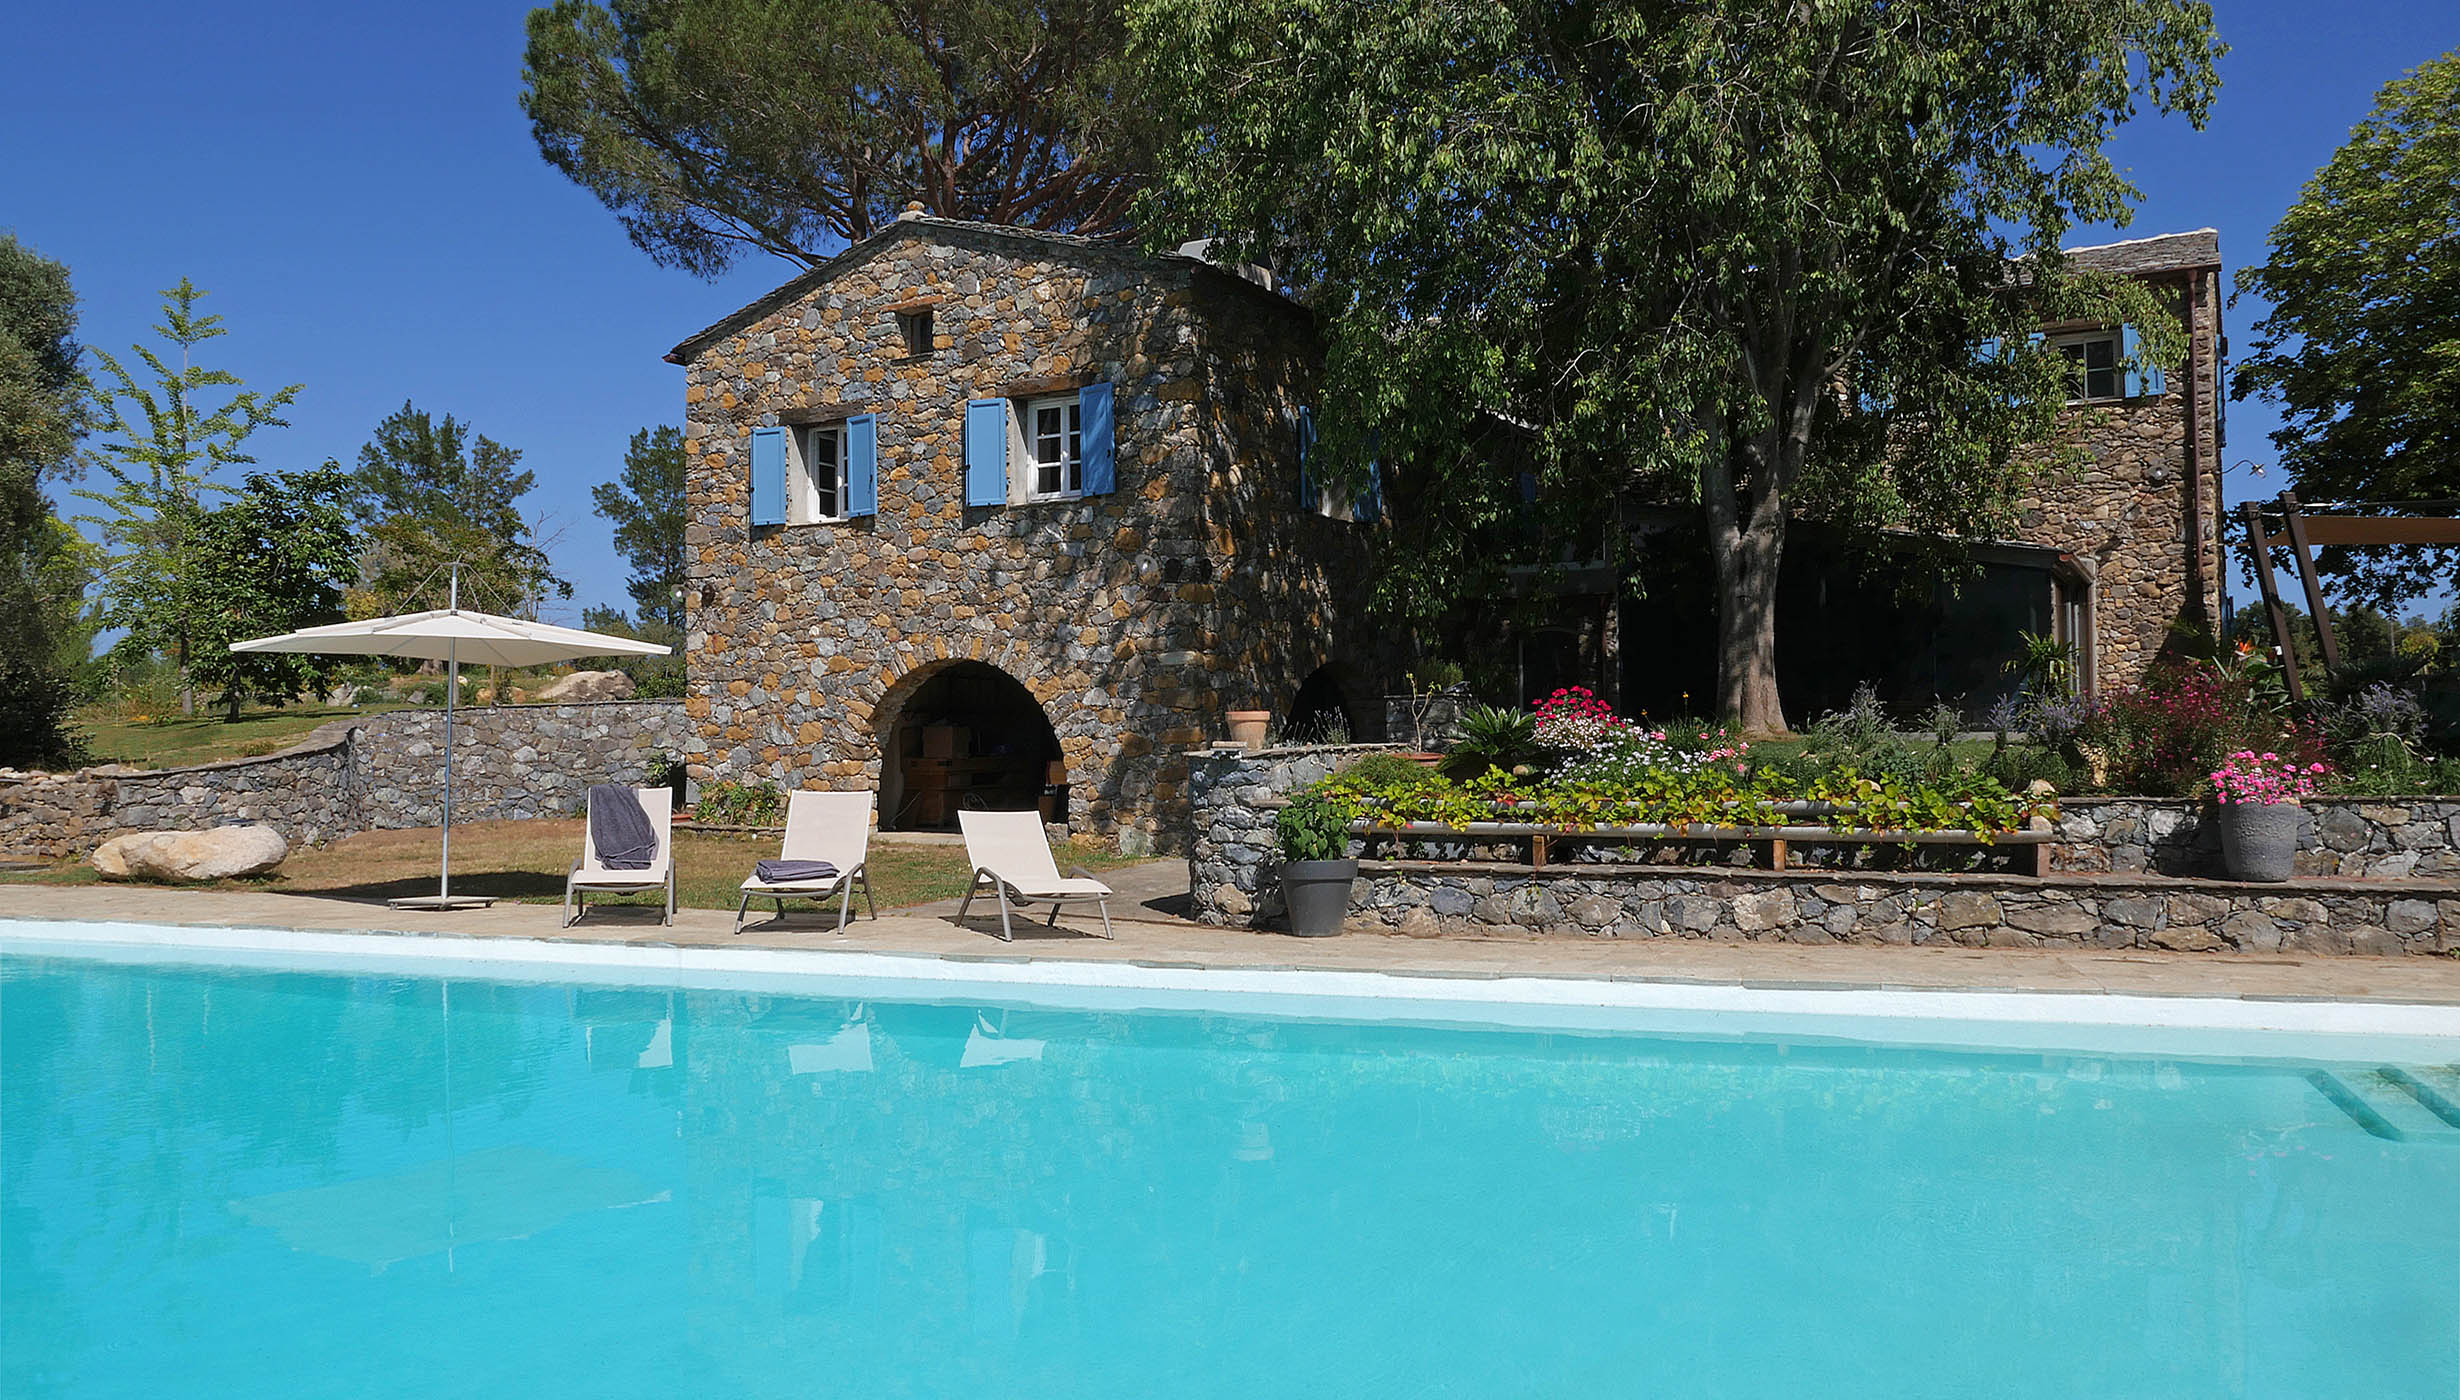 Casa di l'Onda location de maison en Corse avec piscine